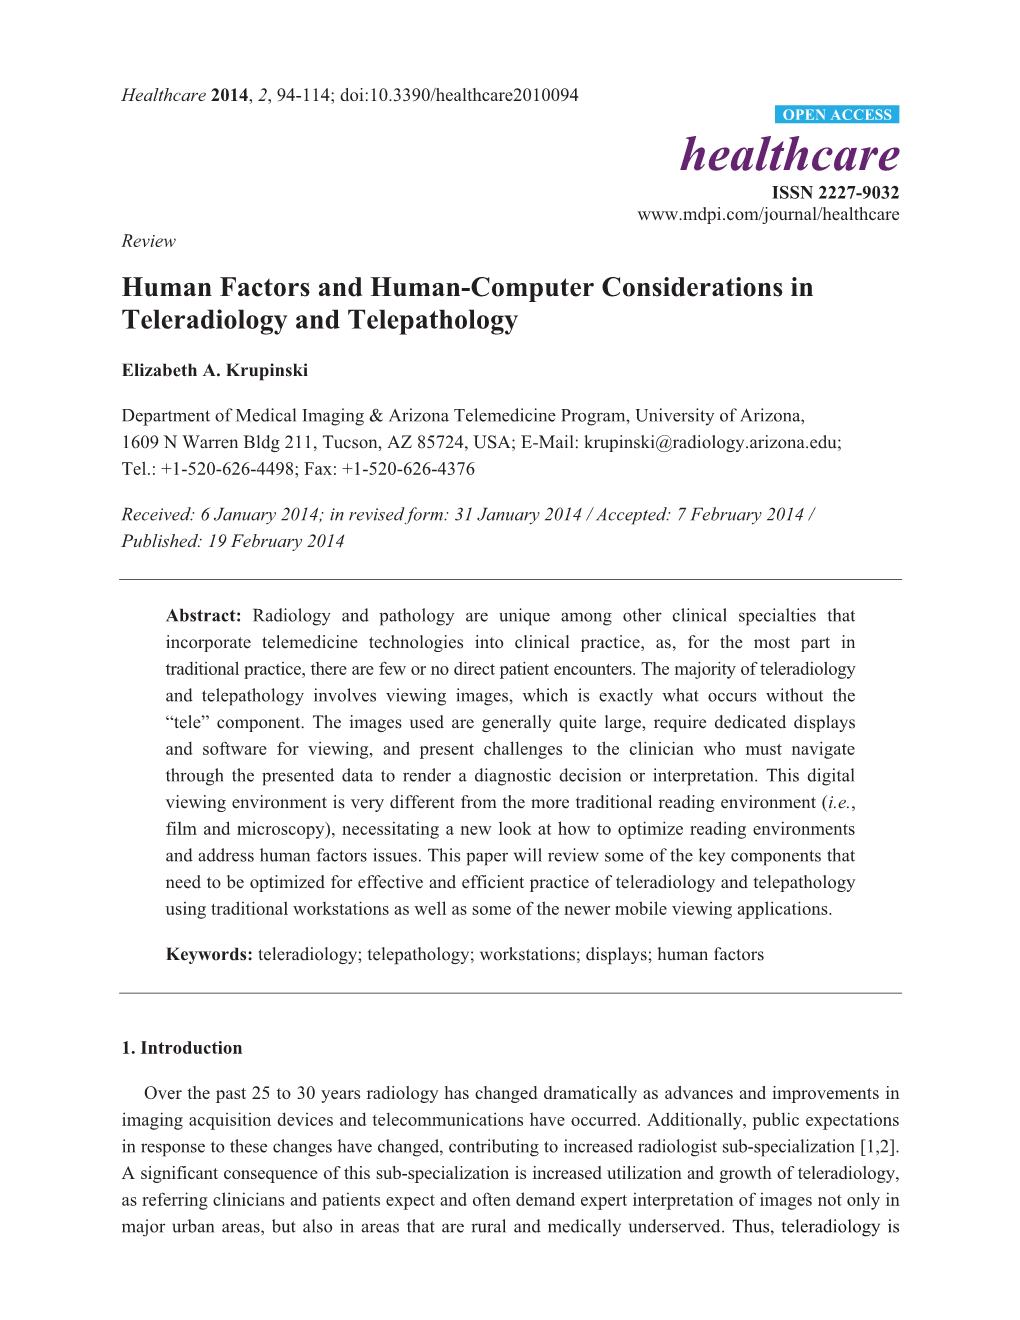 Human Factors and Human-Computer Considerations in Teleradiology and Telepathology